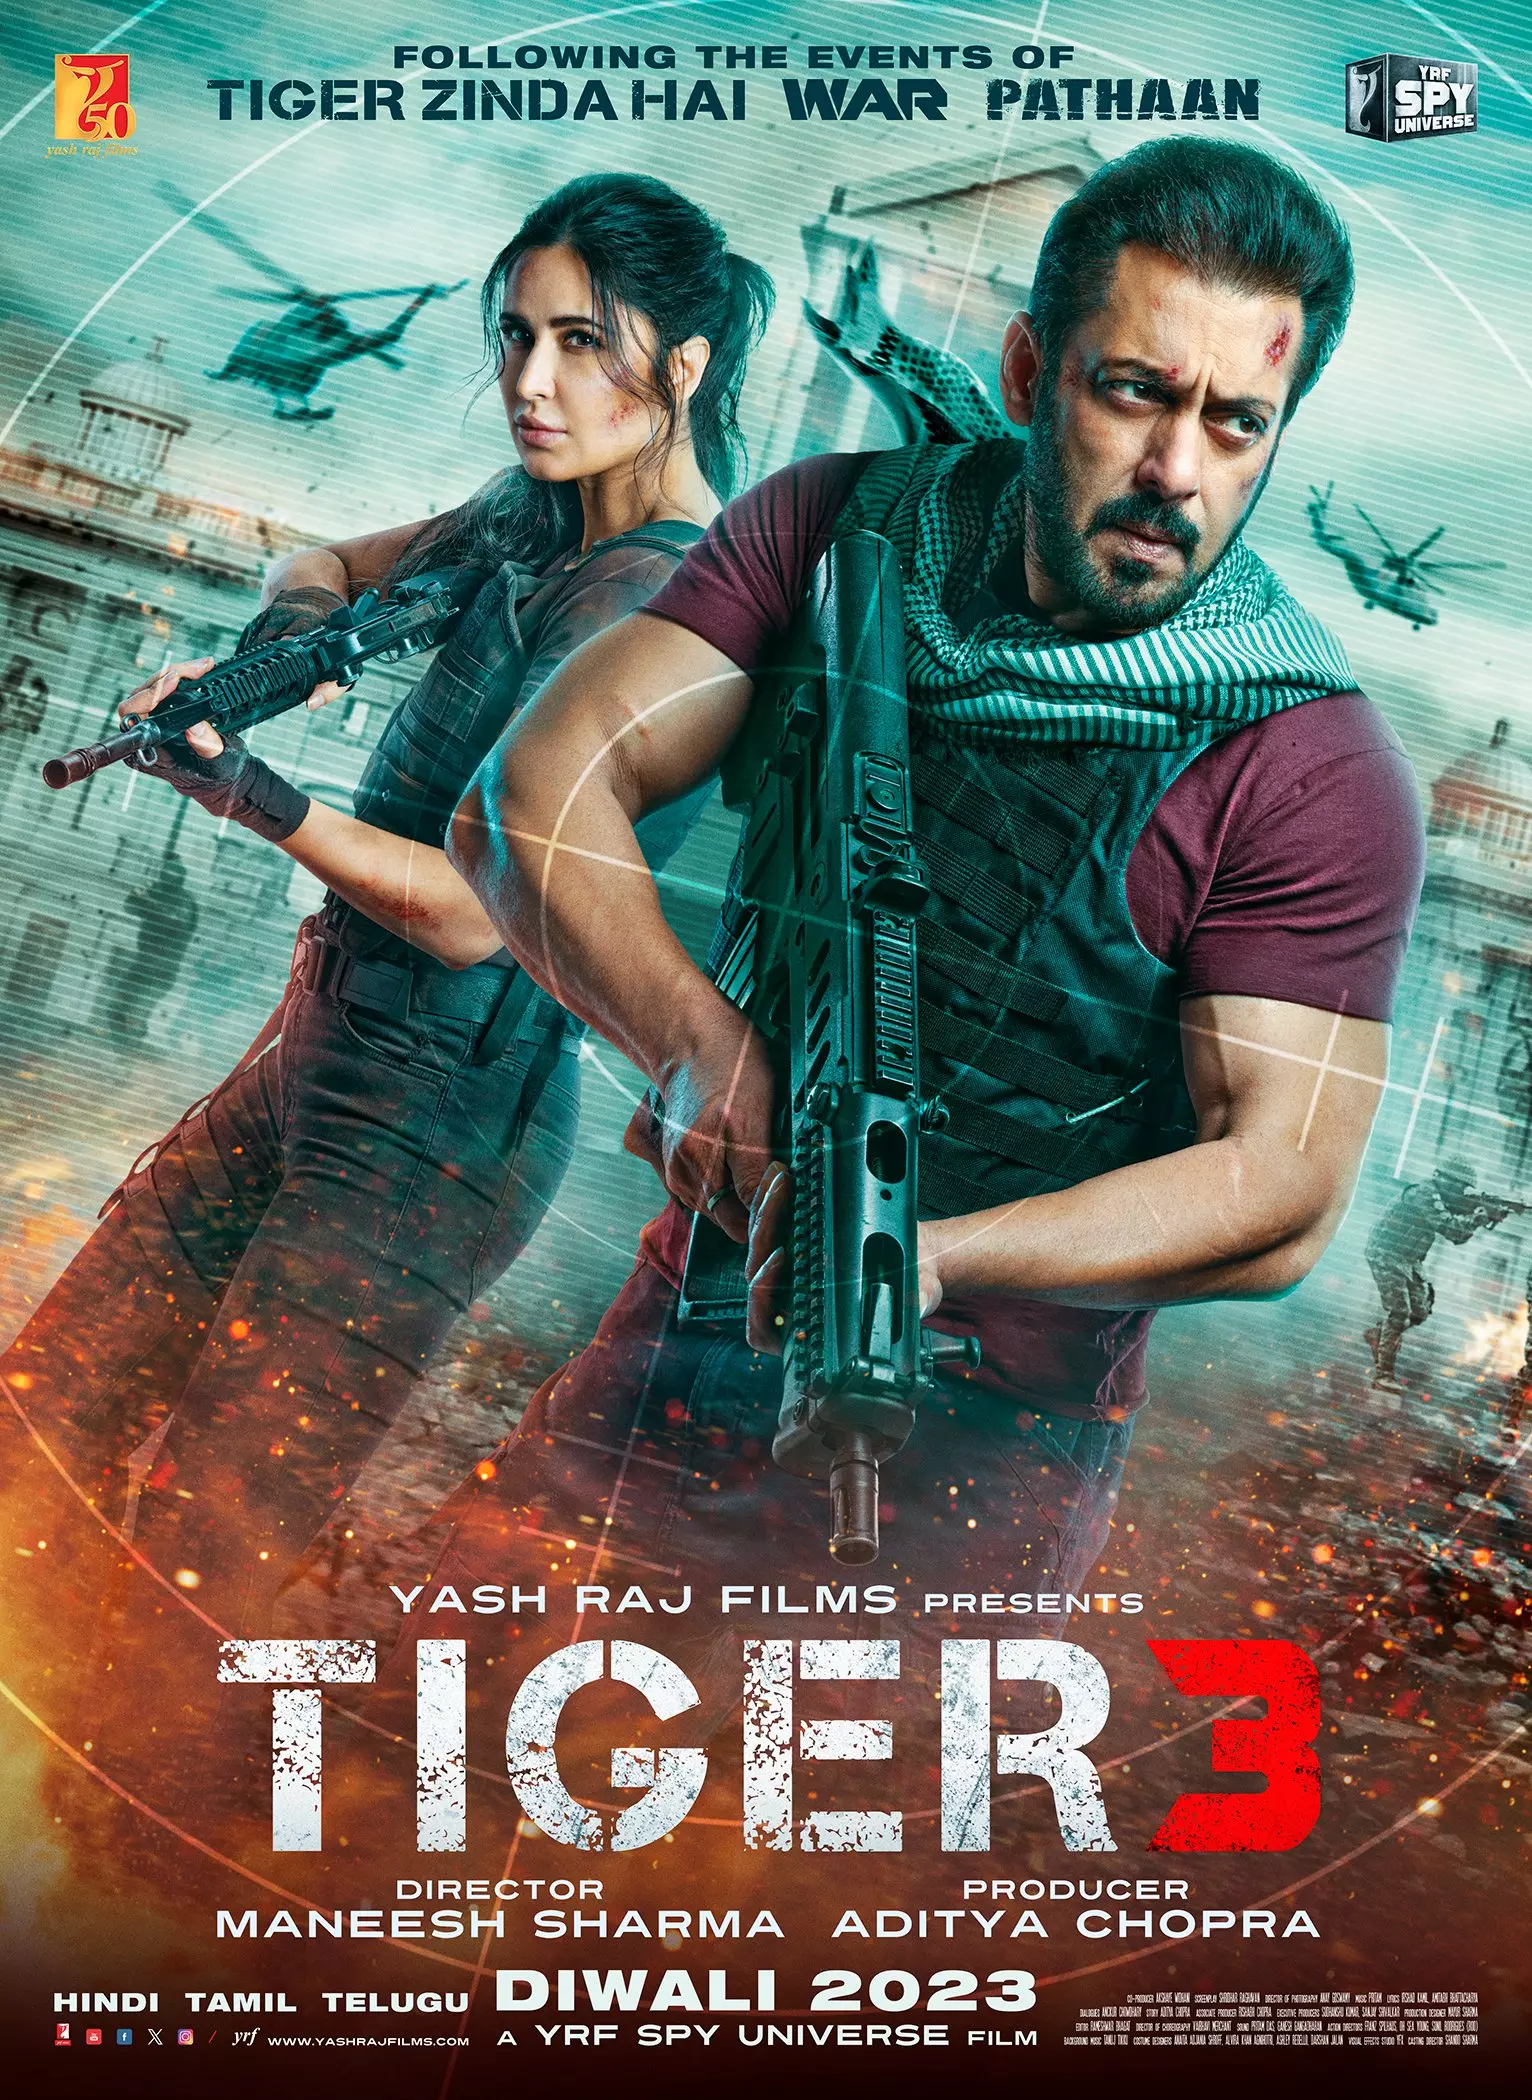 Salman Khan reveals Tiger 3 poster, confirms Diwali debut